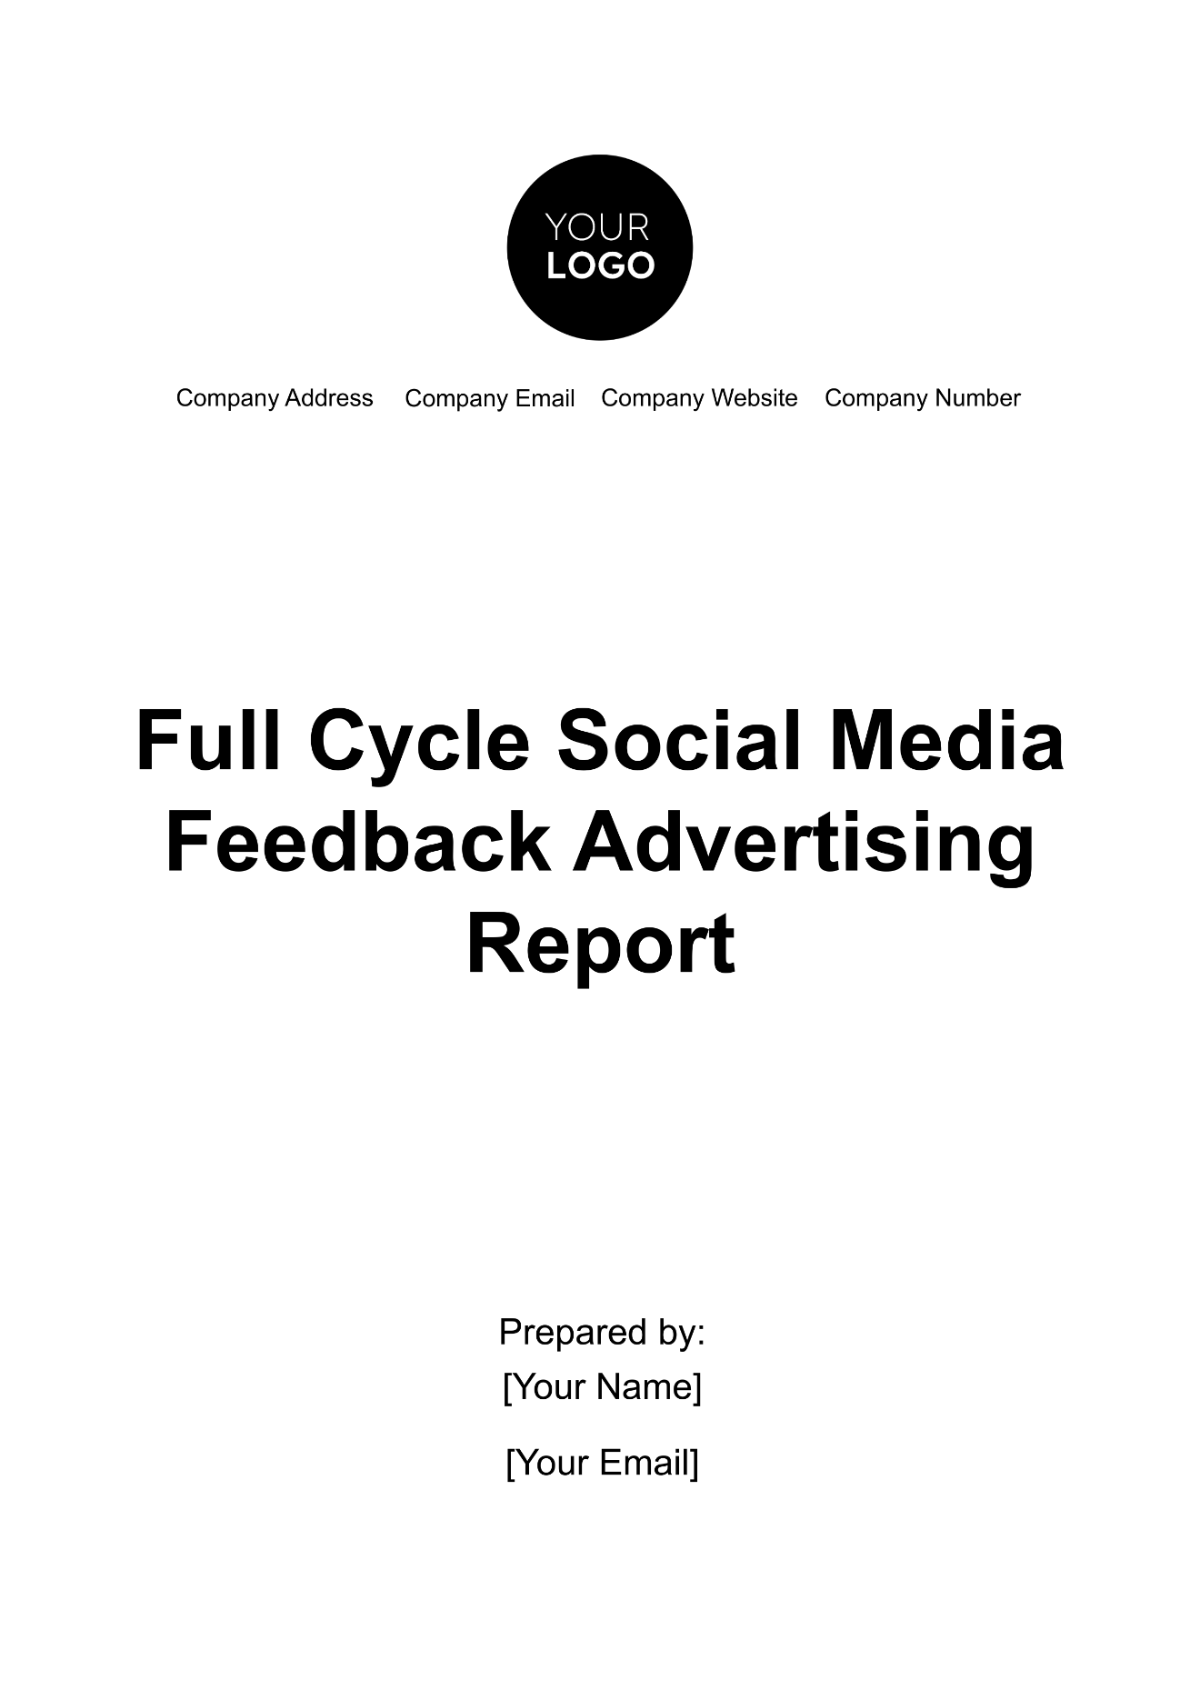 Free Full Cycle Social Media Feedback Advertising Report Template